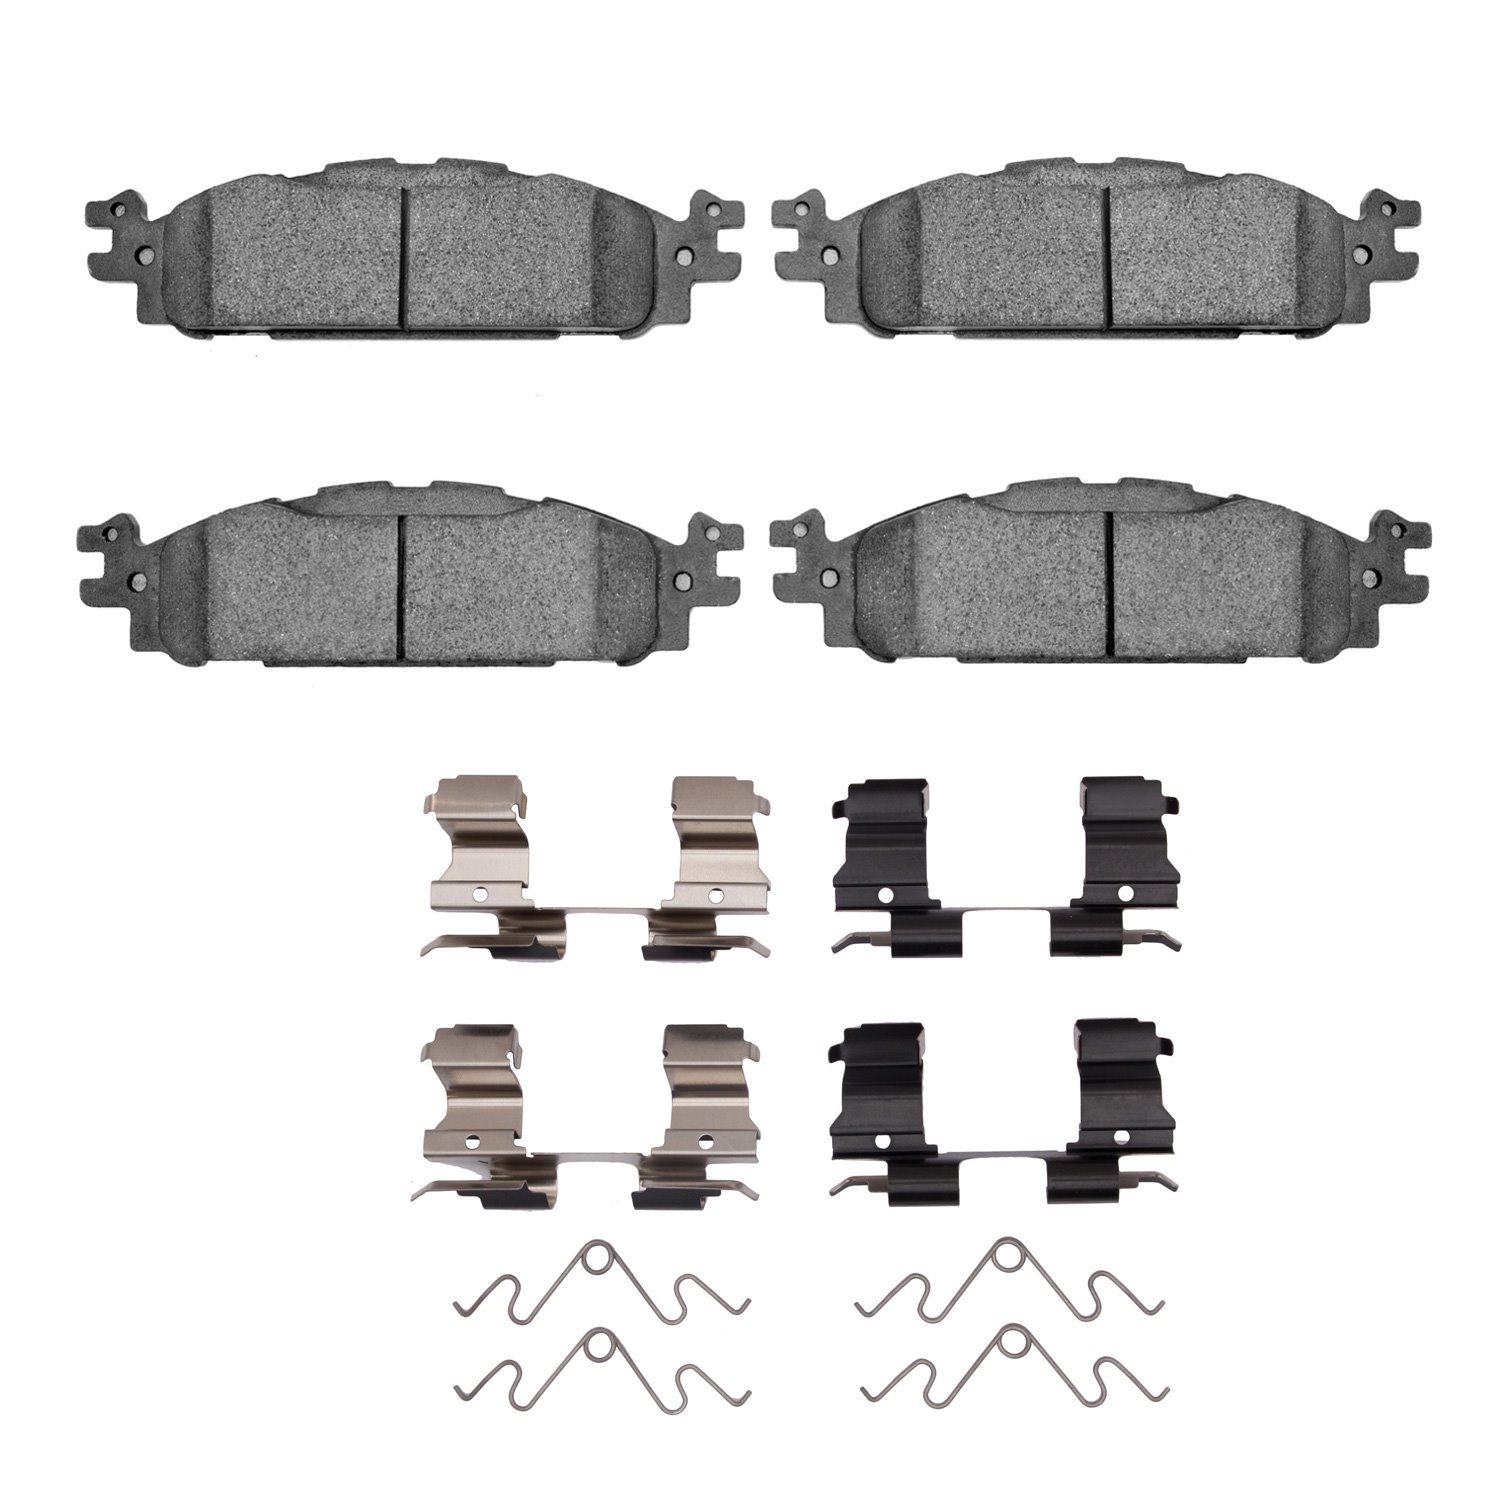 1310-1508-01 3000-Series Ceramic Brake Pads & Hardware Kit, 2009-2019 Ford/Lincoln/Mercury/Mazda, Position: Front